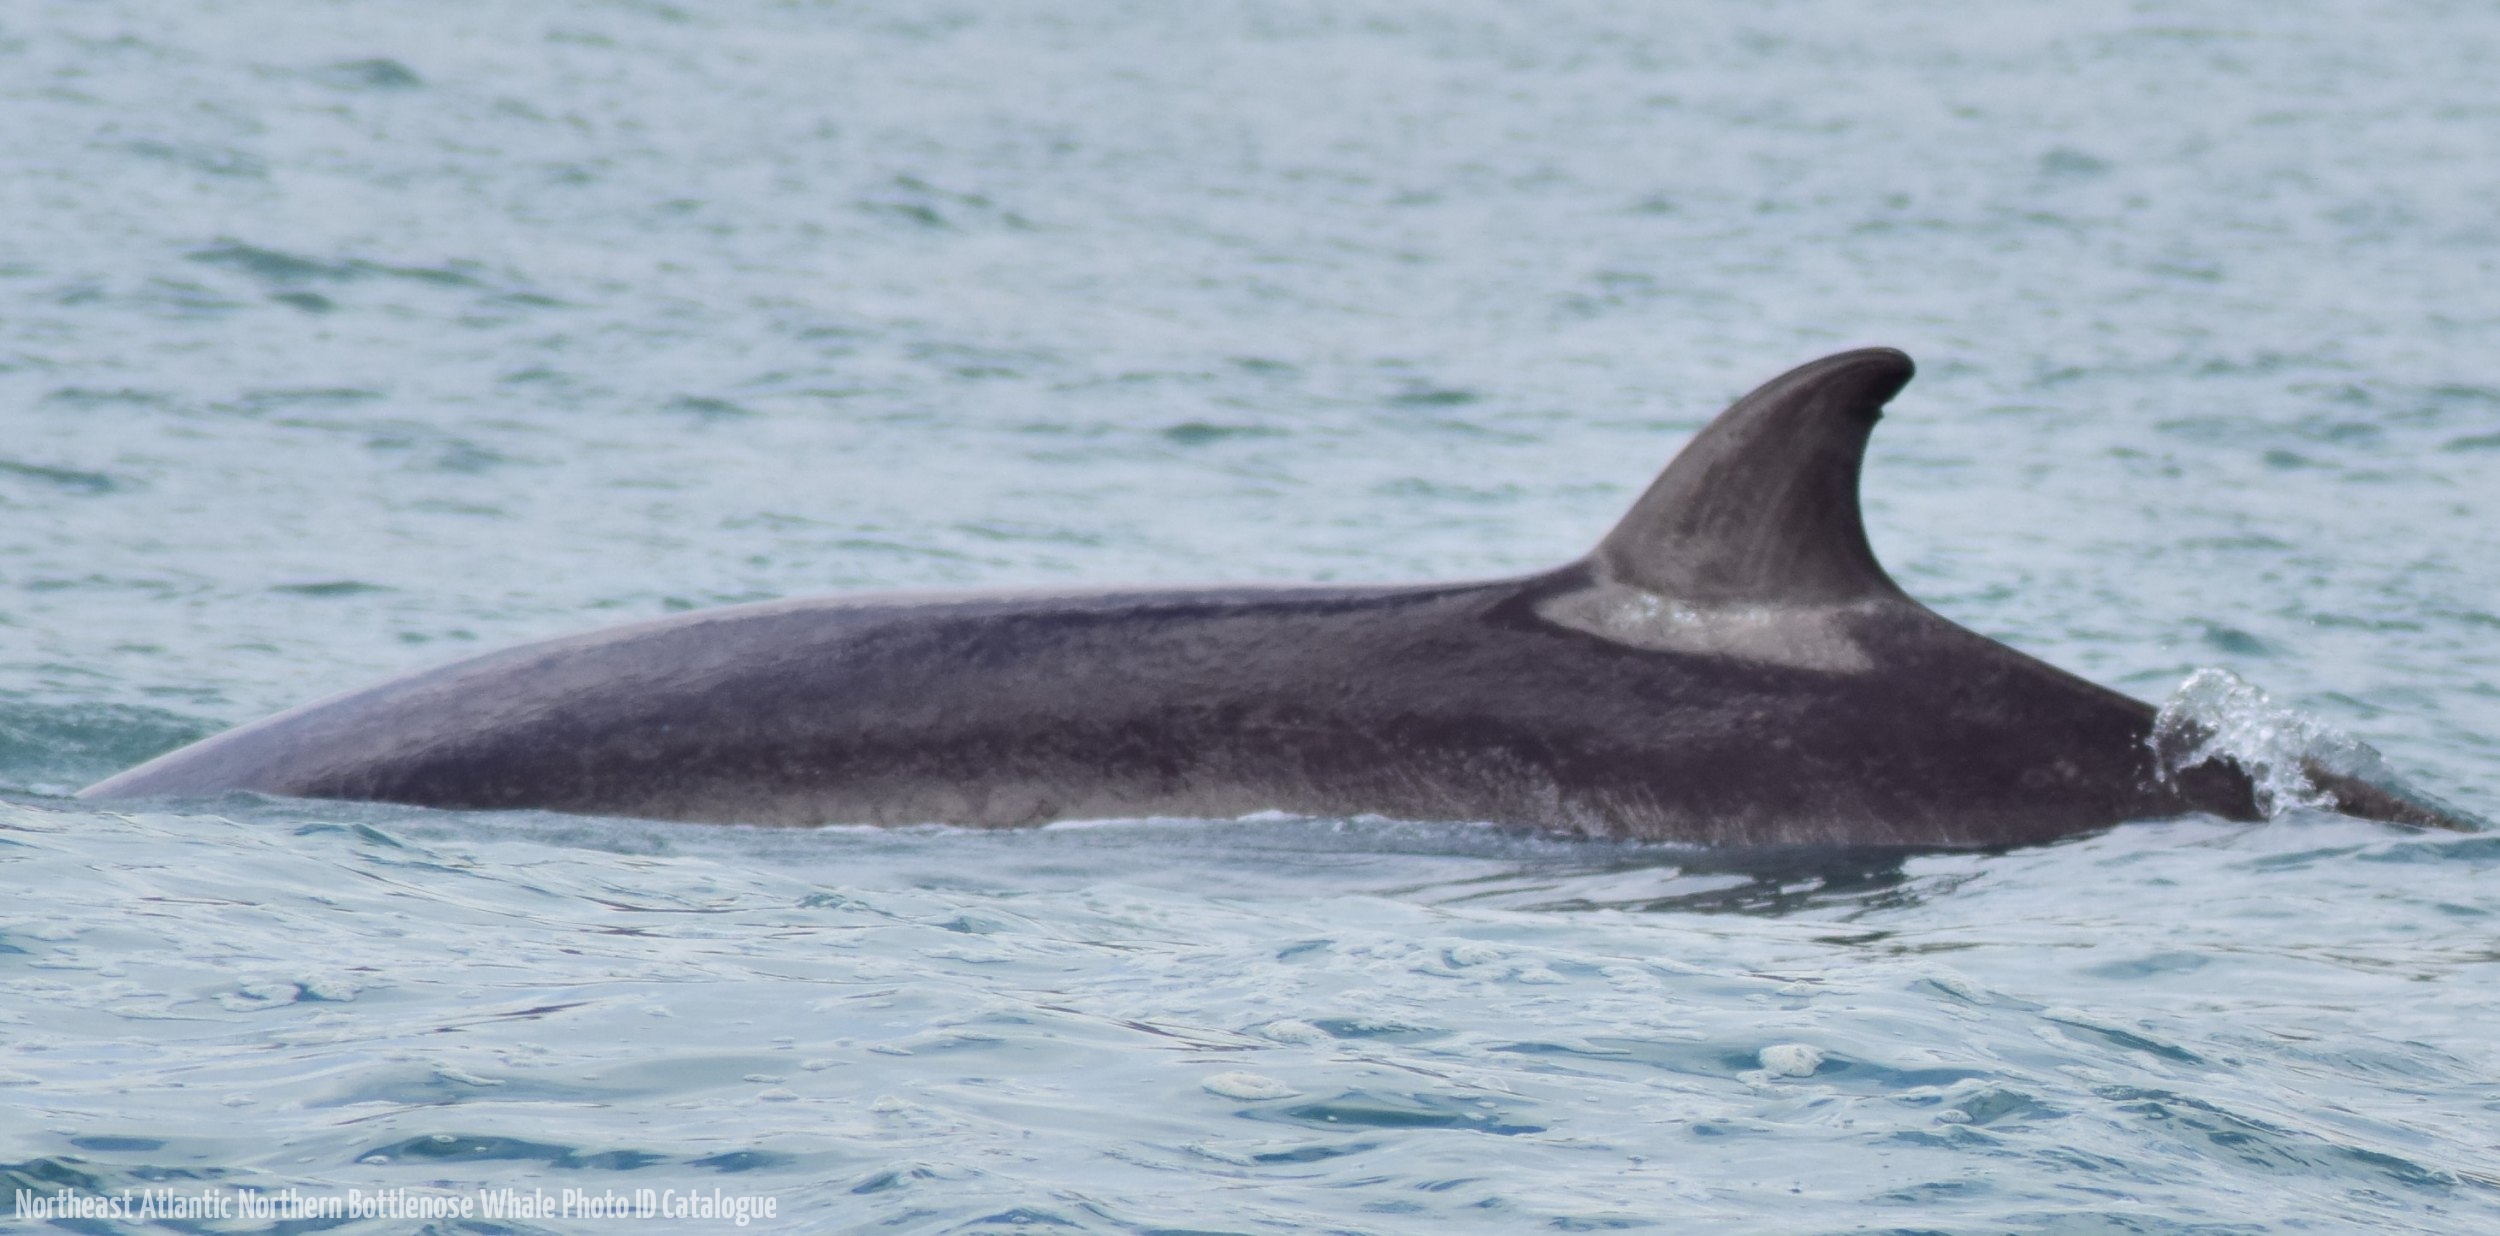 Whale ID: 0225,  Date taken: 25-07-2018,  Photographer: Nacho Oria